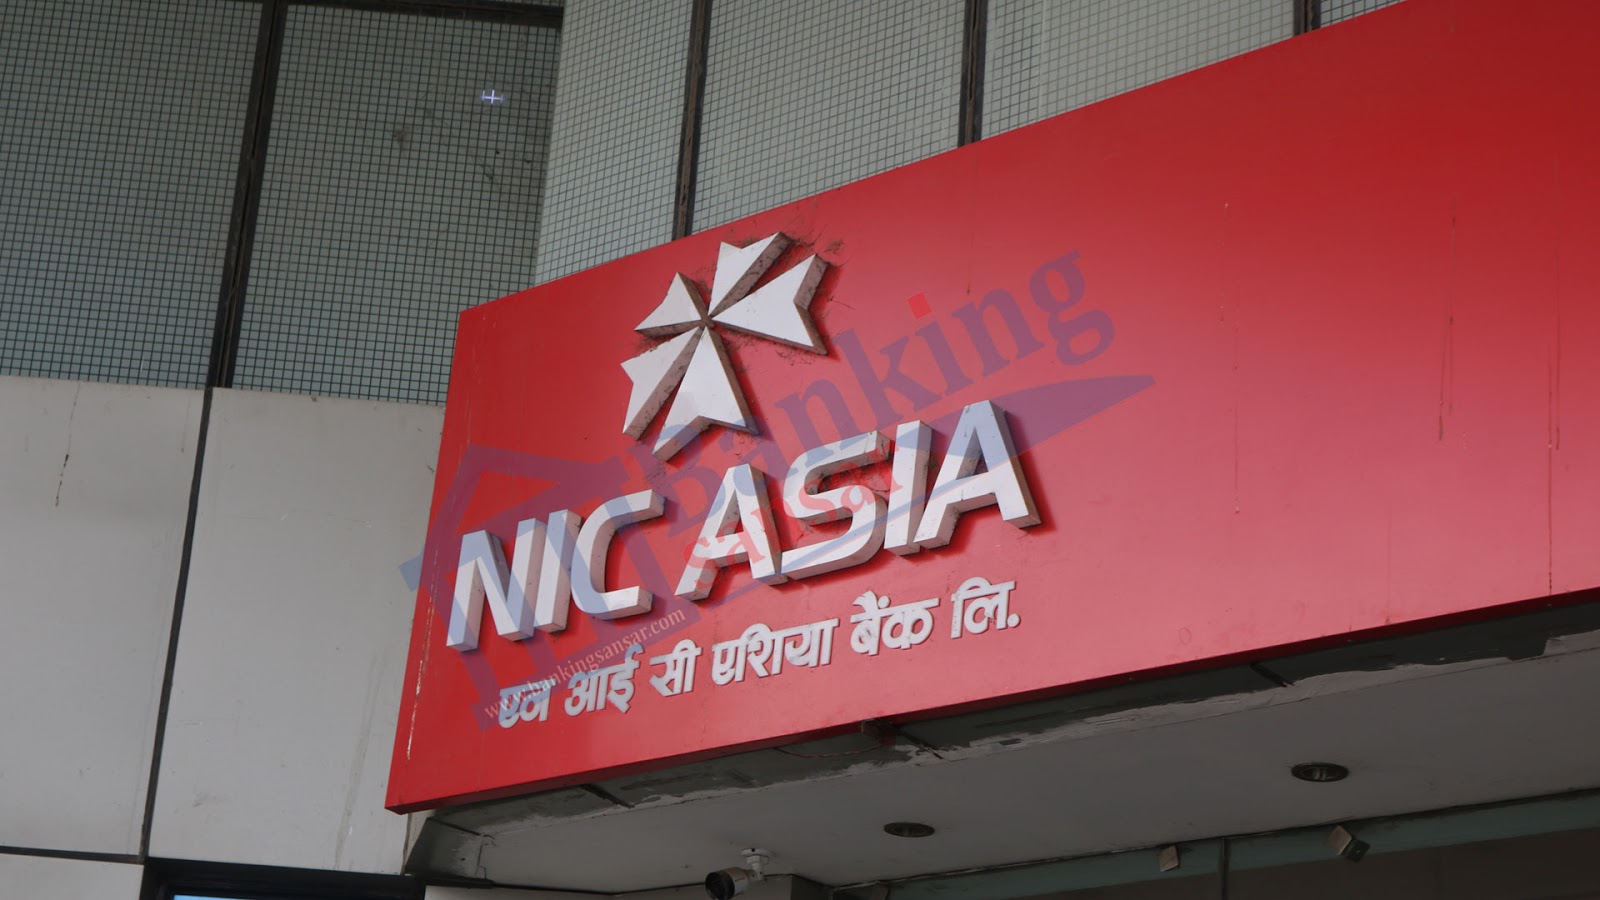  Nic Asia Bank